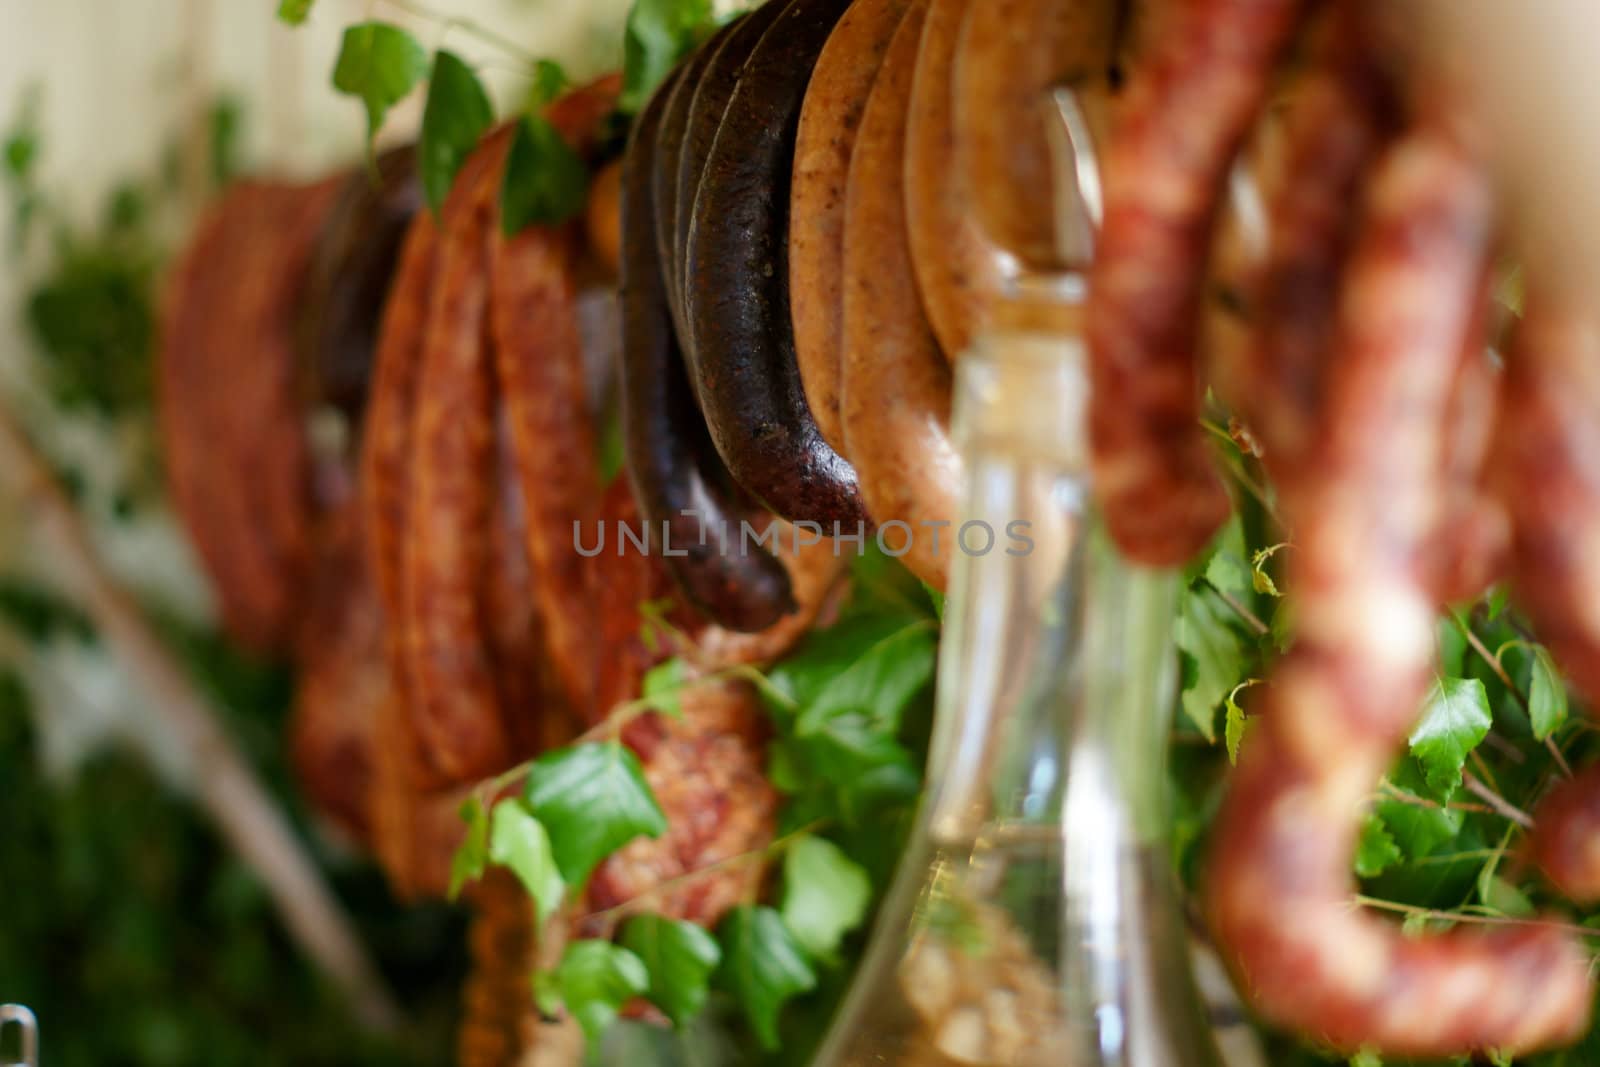 farmhouse table with traditional Polish delicacies. Ham, sausage, bread, etc.